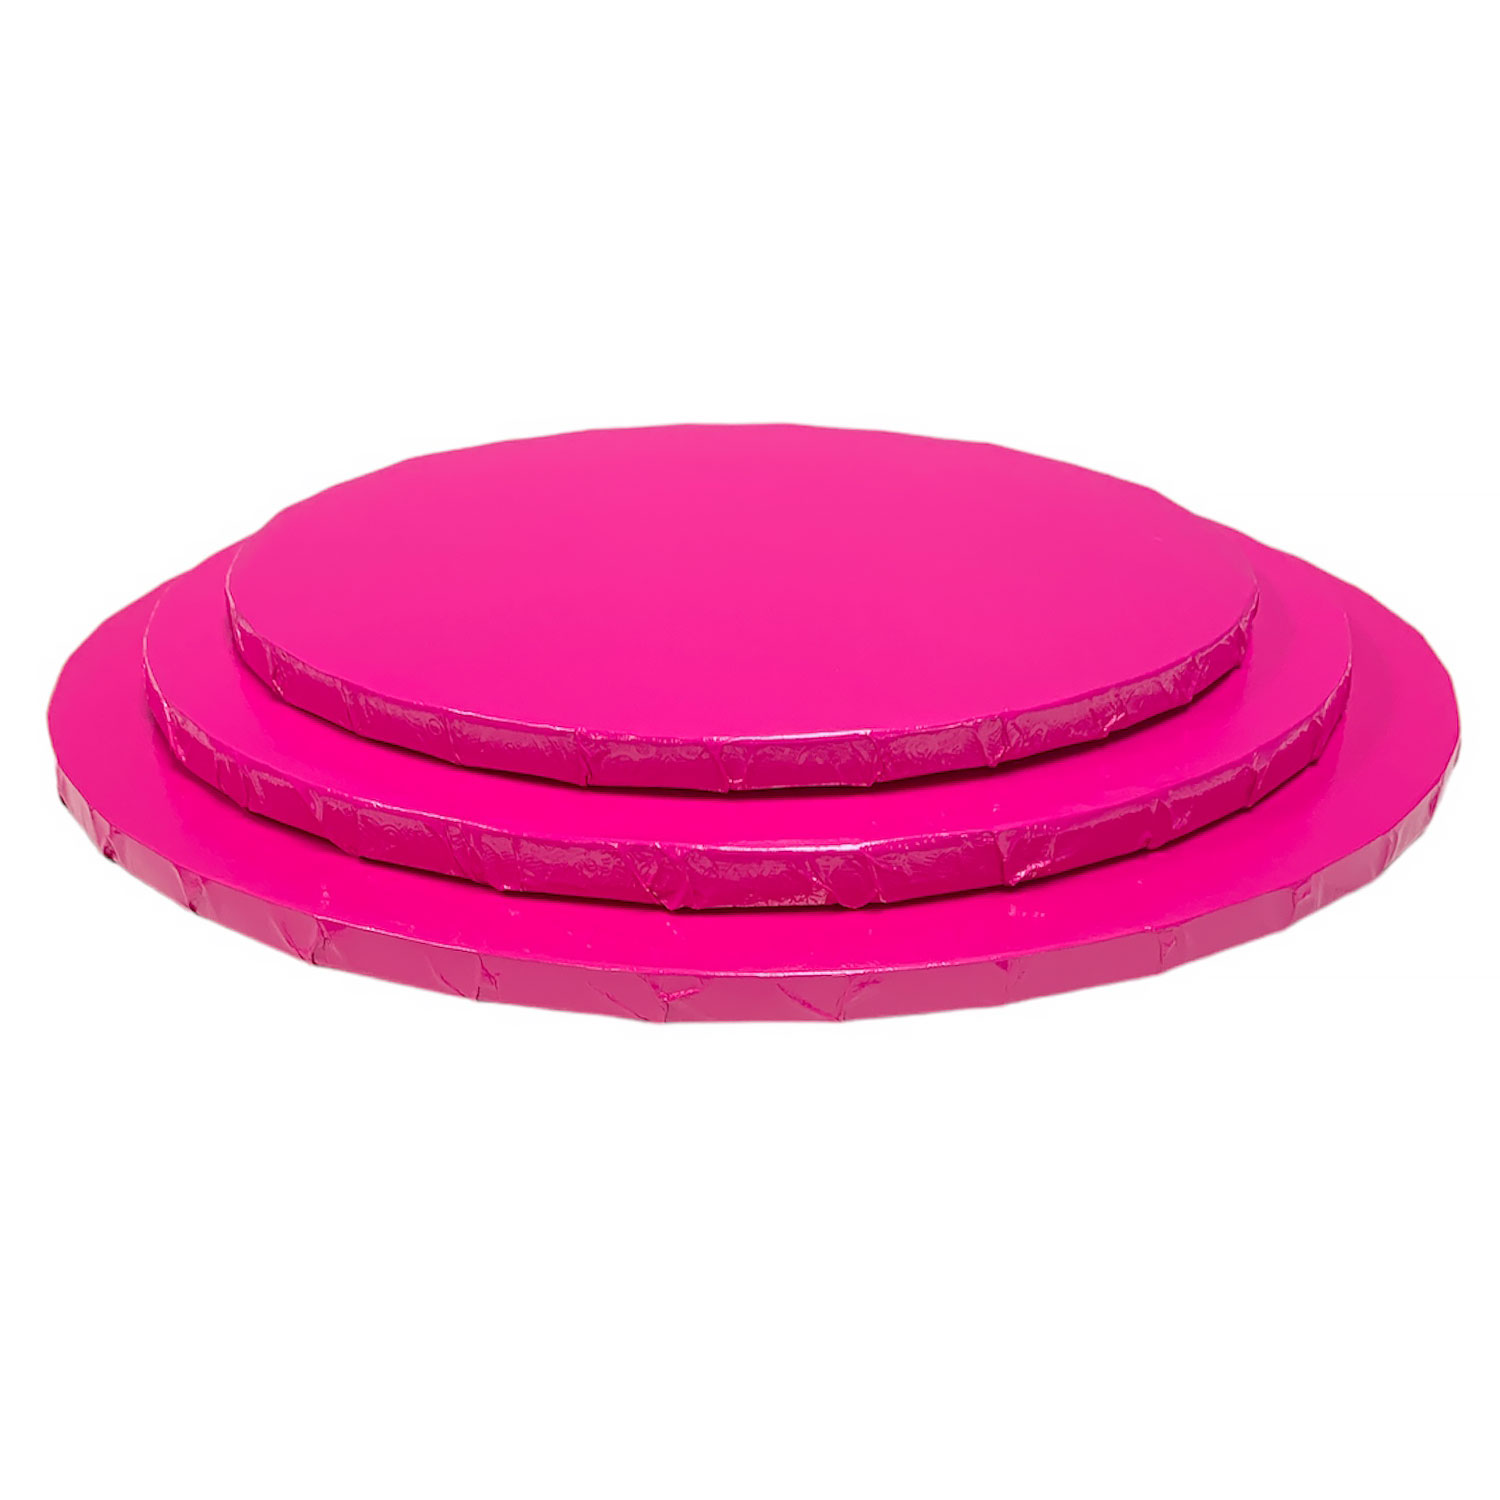 14" Round Pink Foil Cake Drum